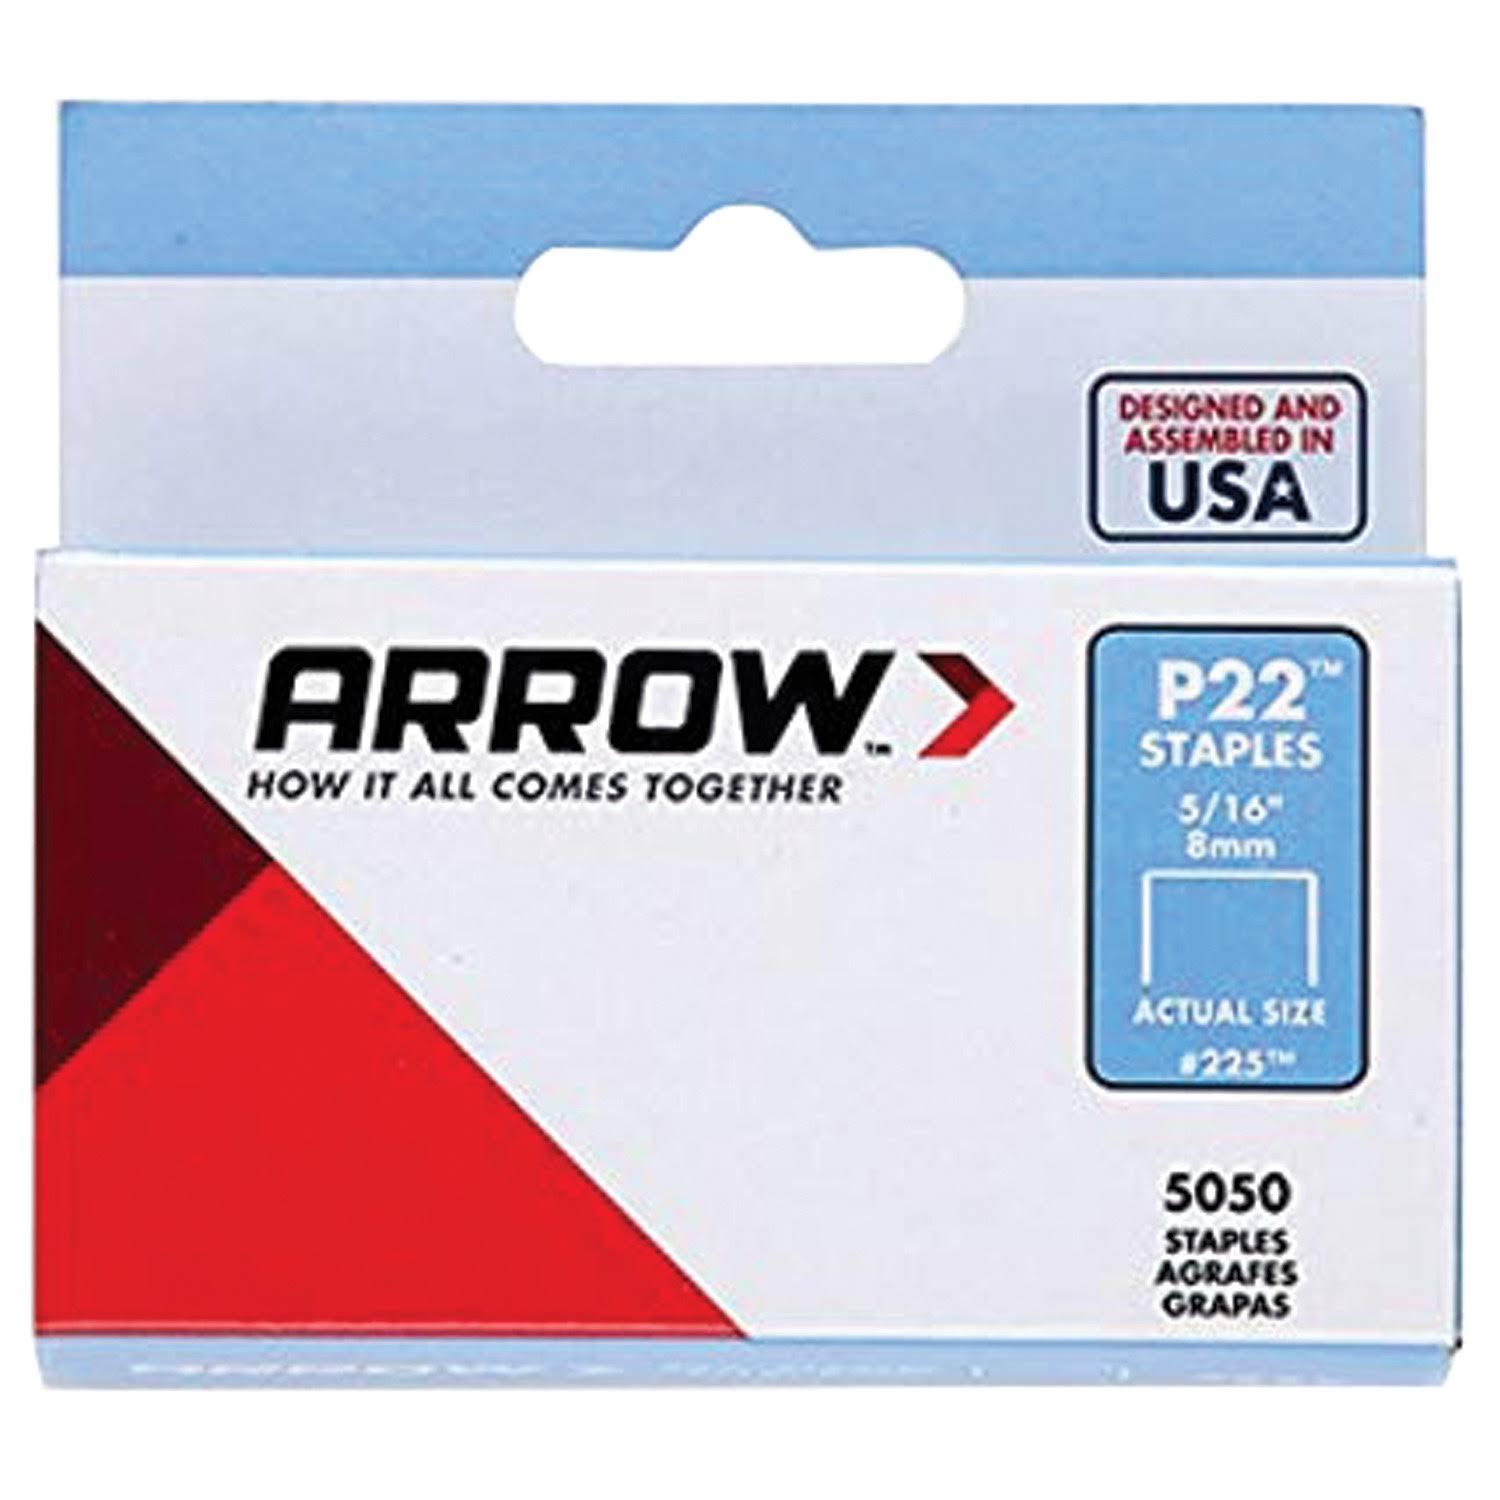 Arrow P22 Staples Box 5000 - 8mm, 5/16in